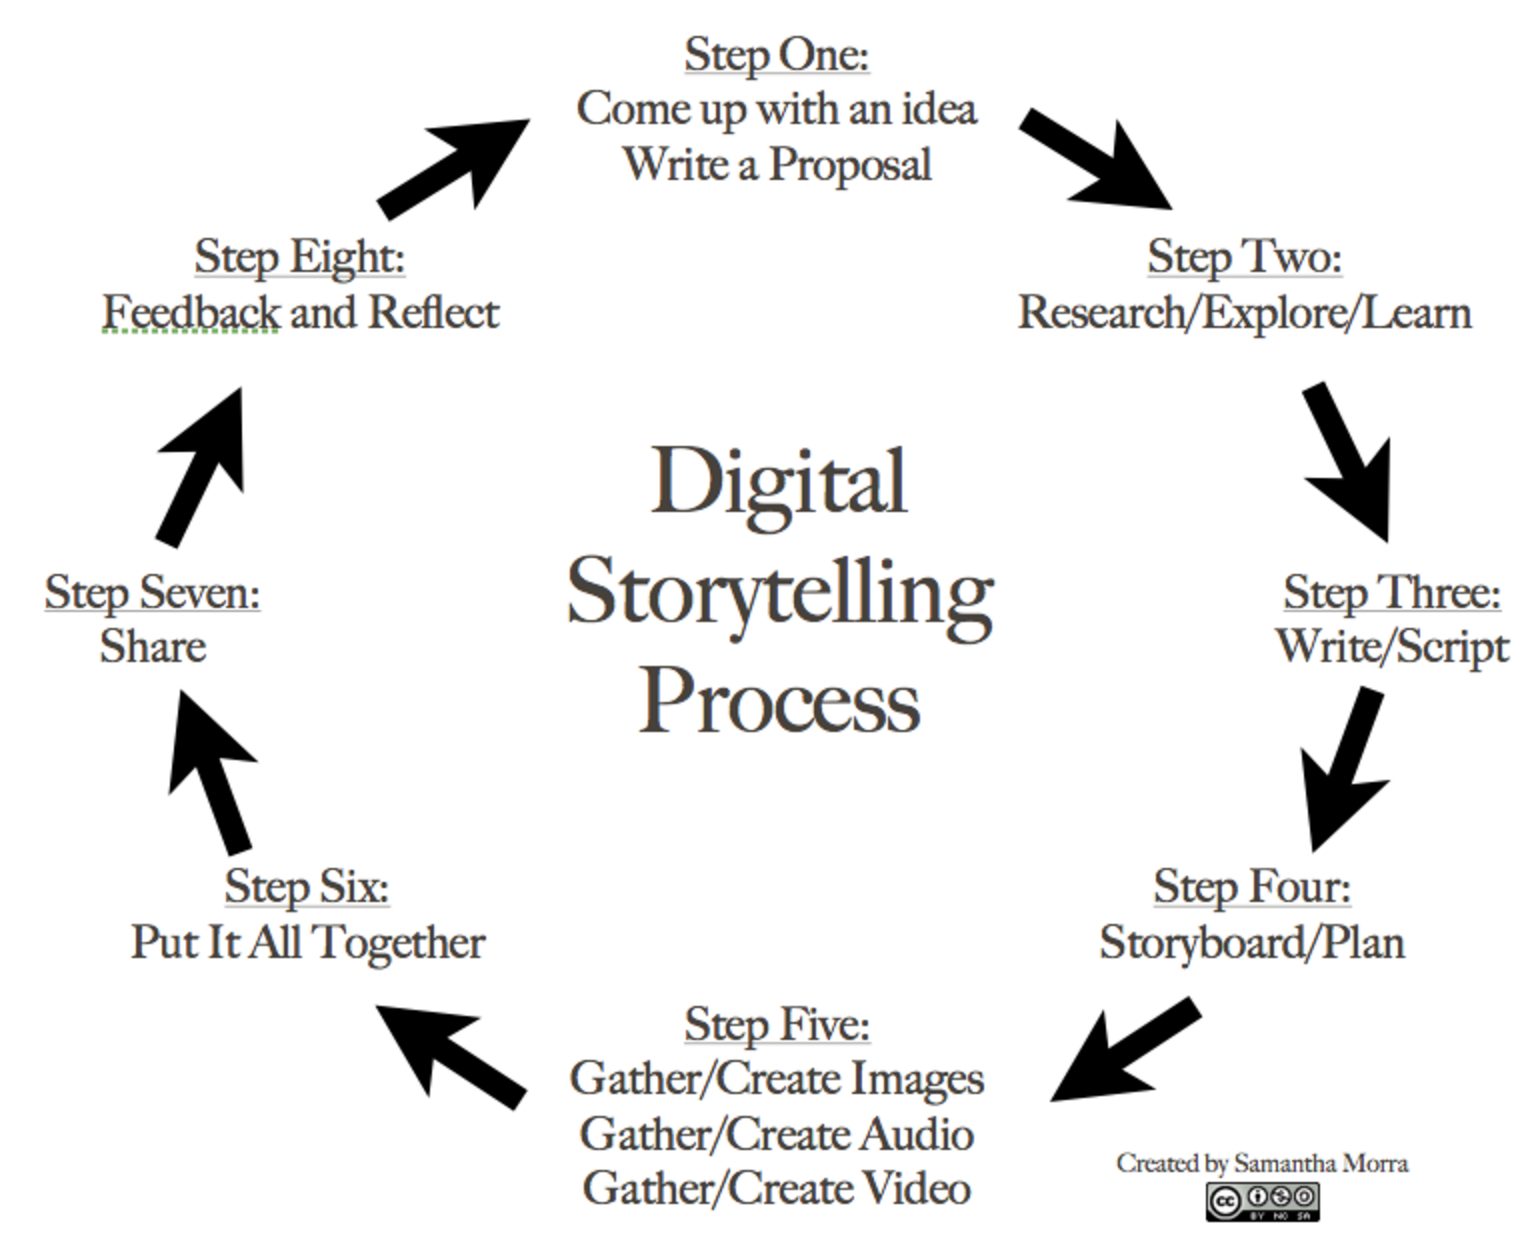 Step step scripts. Digital storytelling. Диджитал сторителлинг. Мультимедийный сторителлинг. Цифровой сторителлинг картинки.